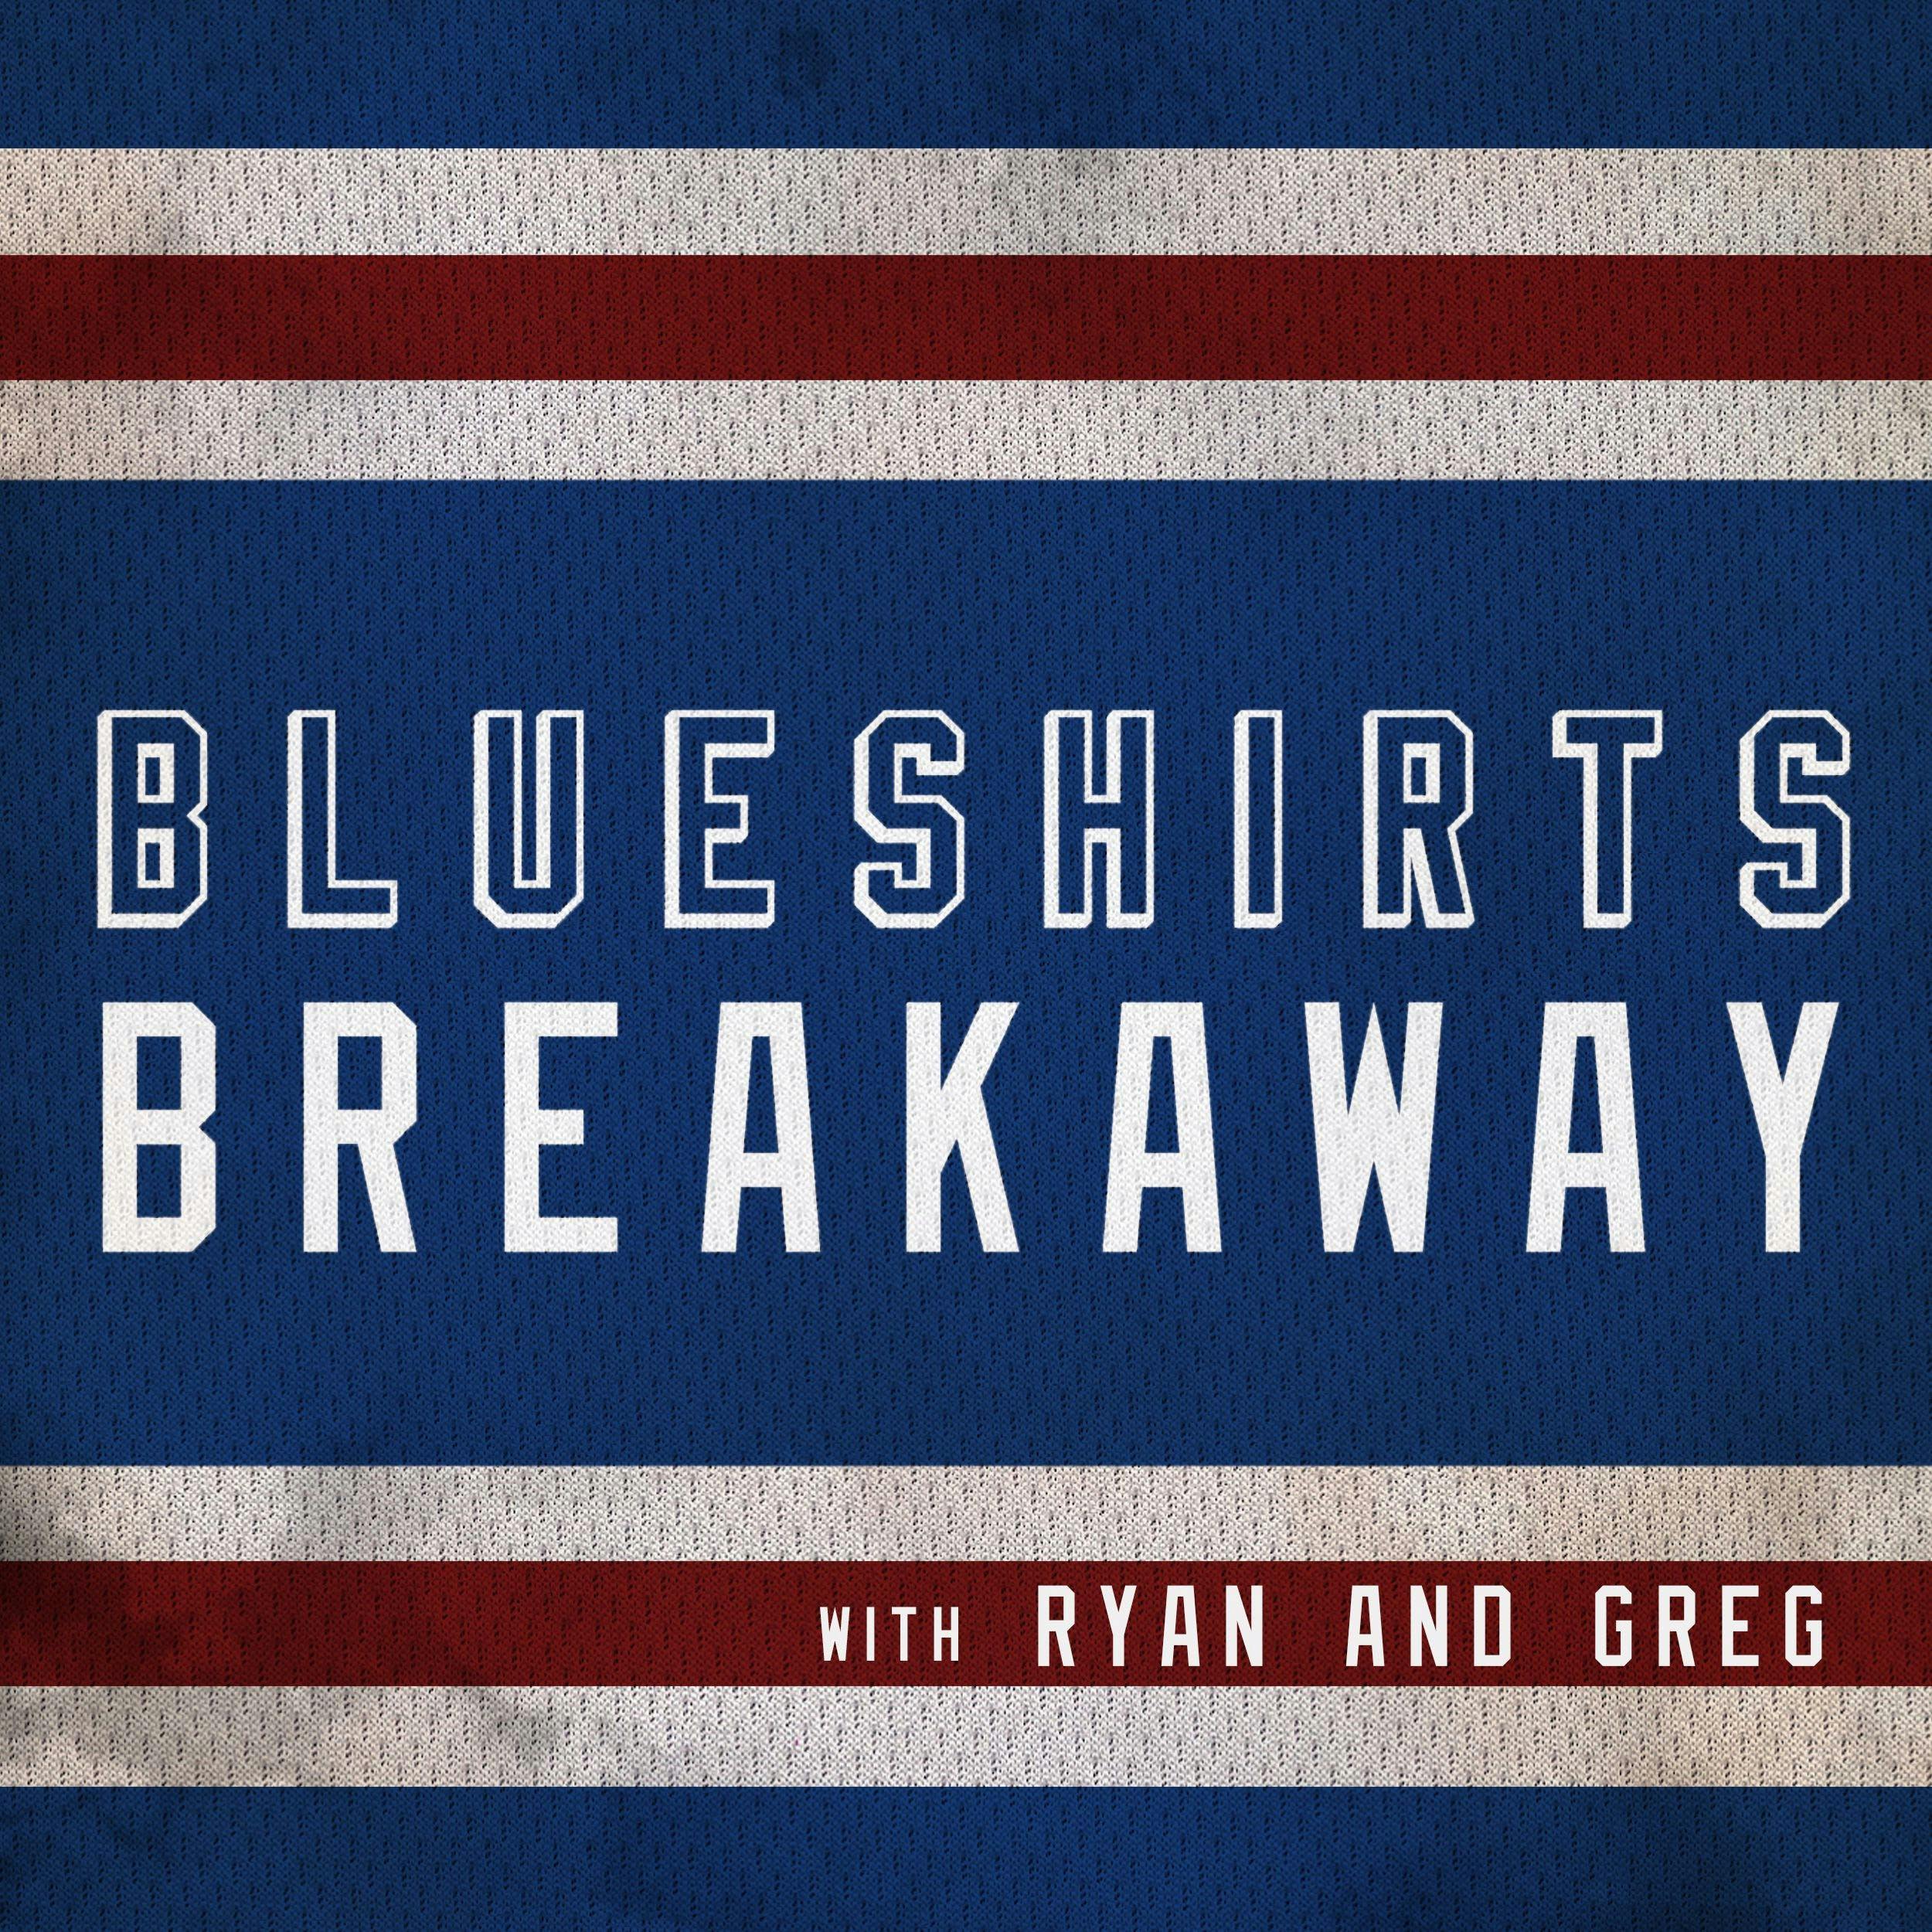 Blueshirts Breakaway EP 35 - 4 More Years of Kreider, Hayes's Bridge Deal and Cooperstown